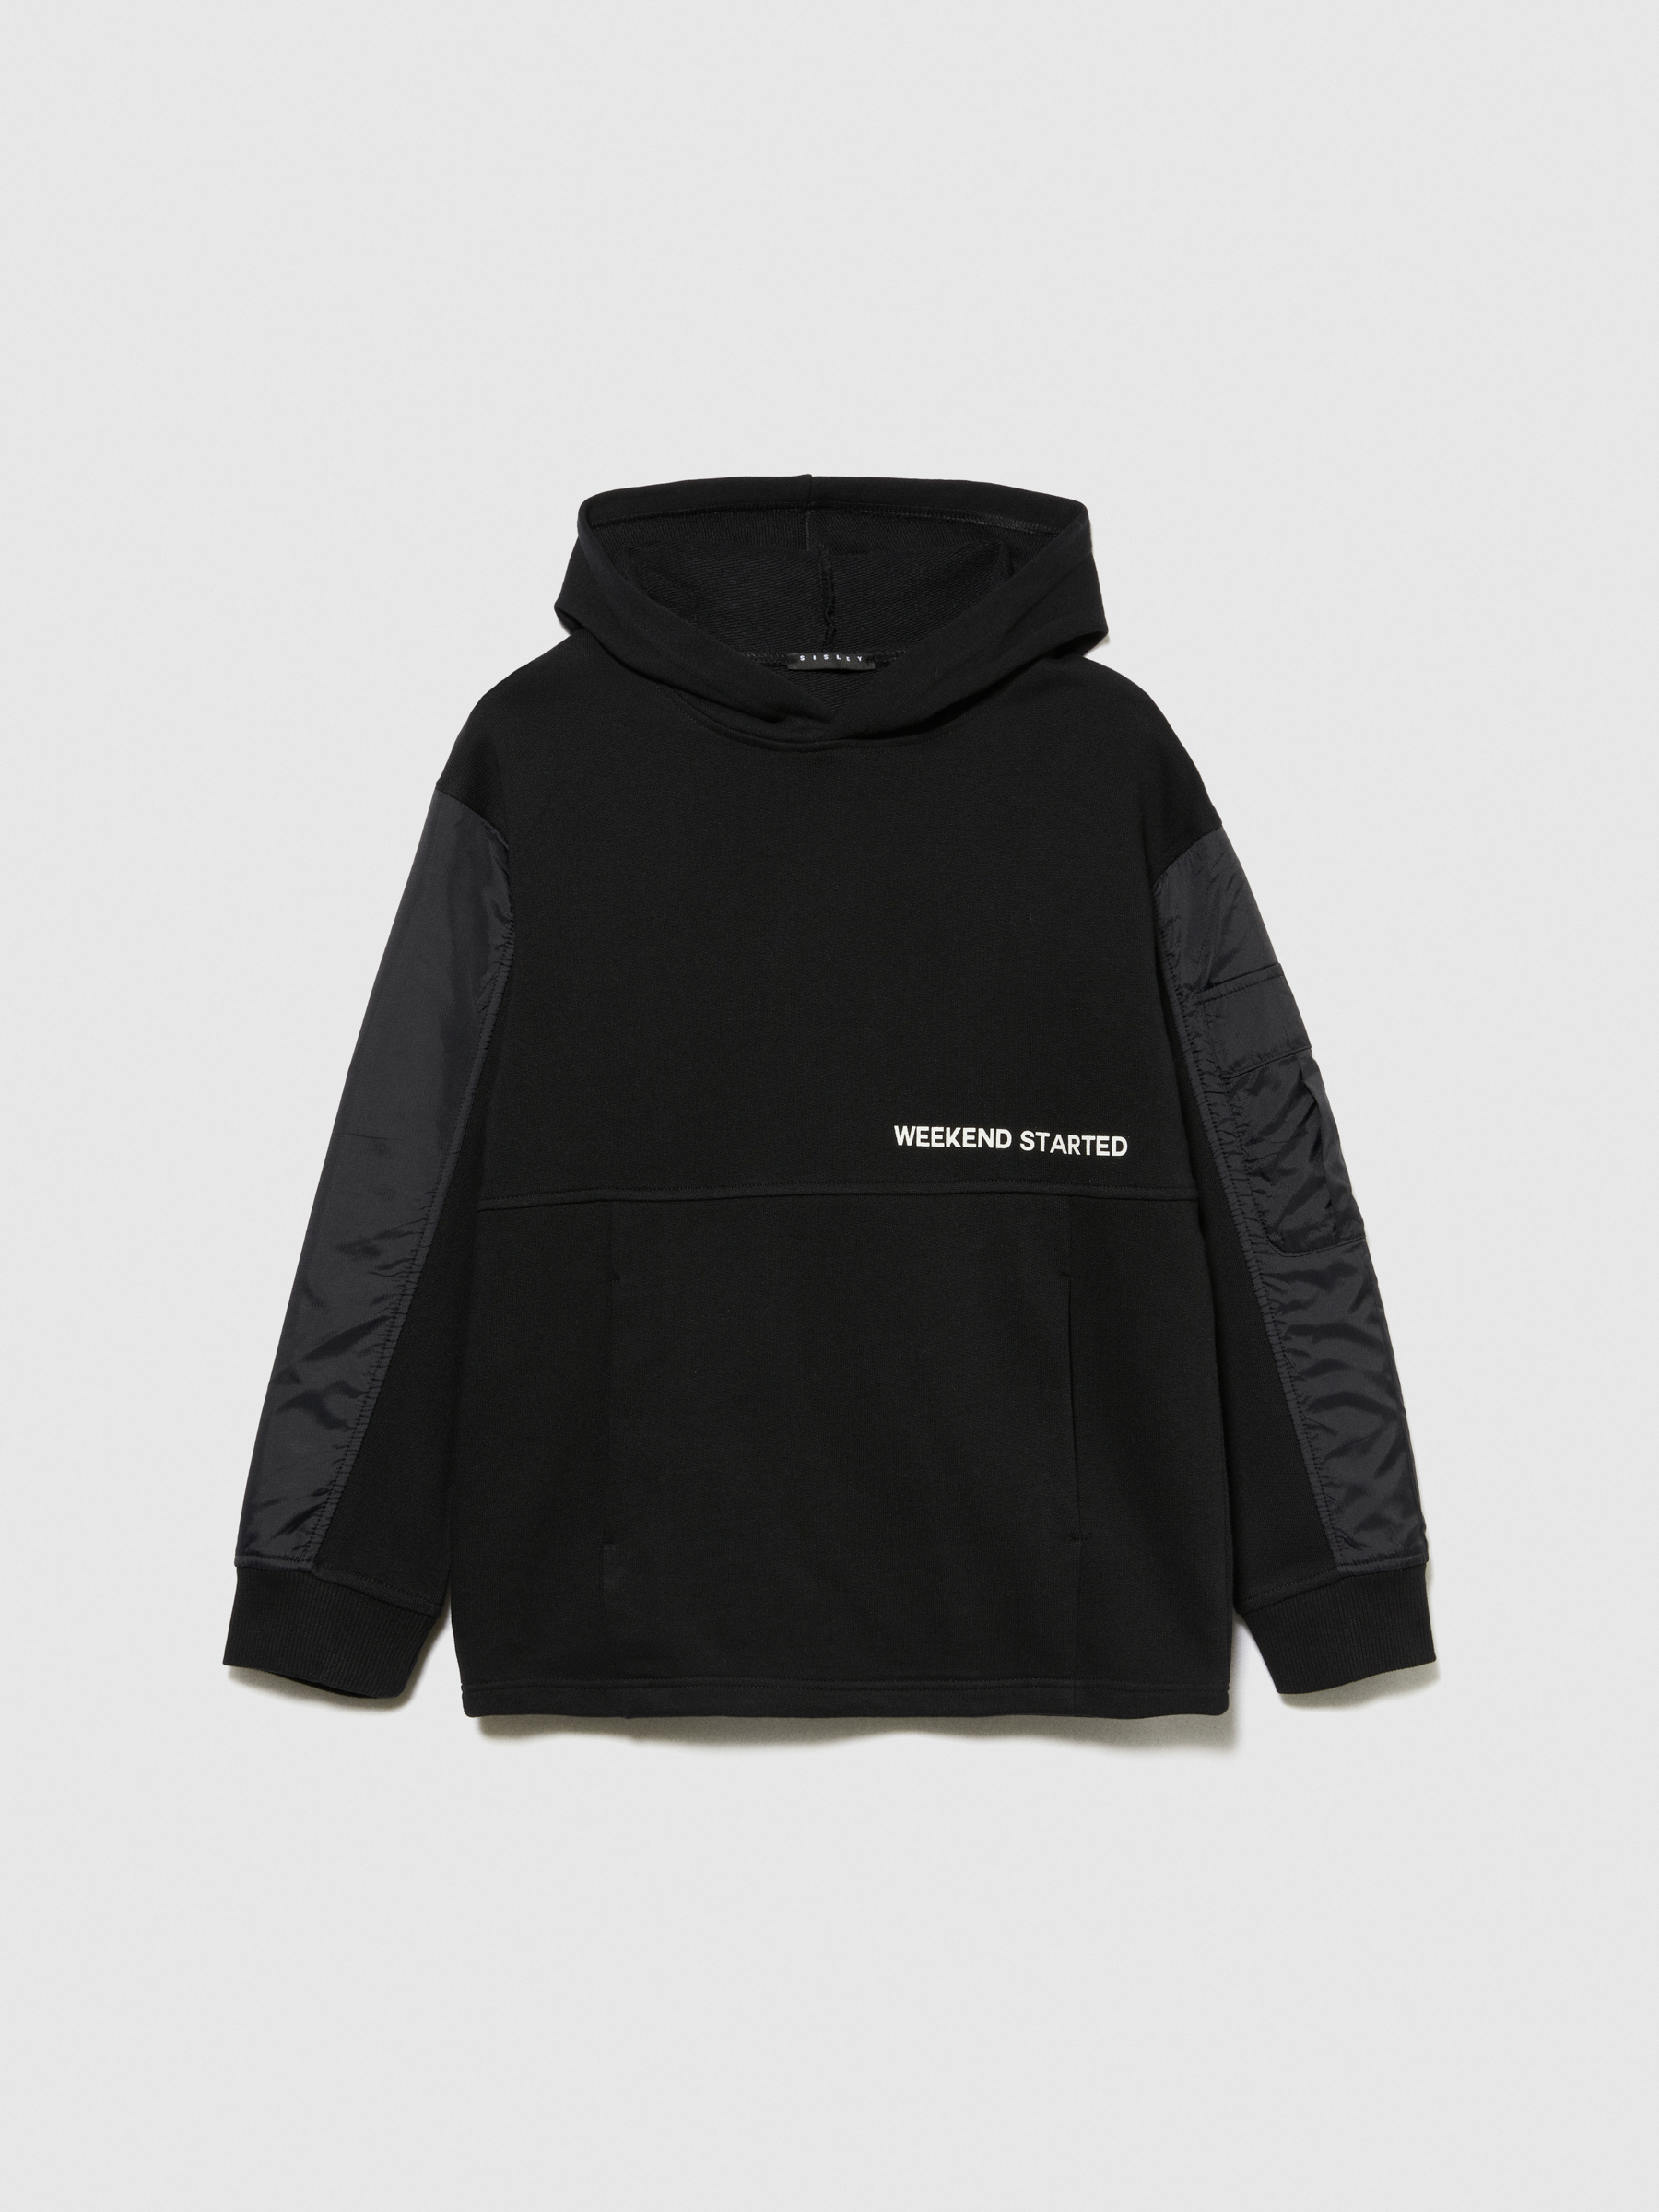 Sisley Young - Mixed Material Sweatshirt With Maxi Print, Man, Black, Size: EL